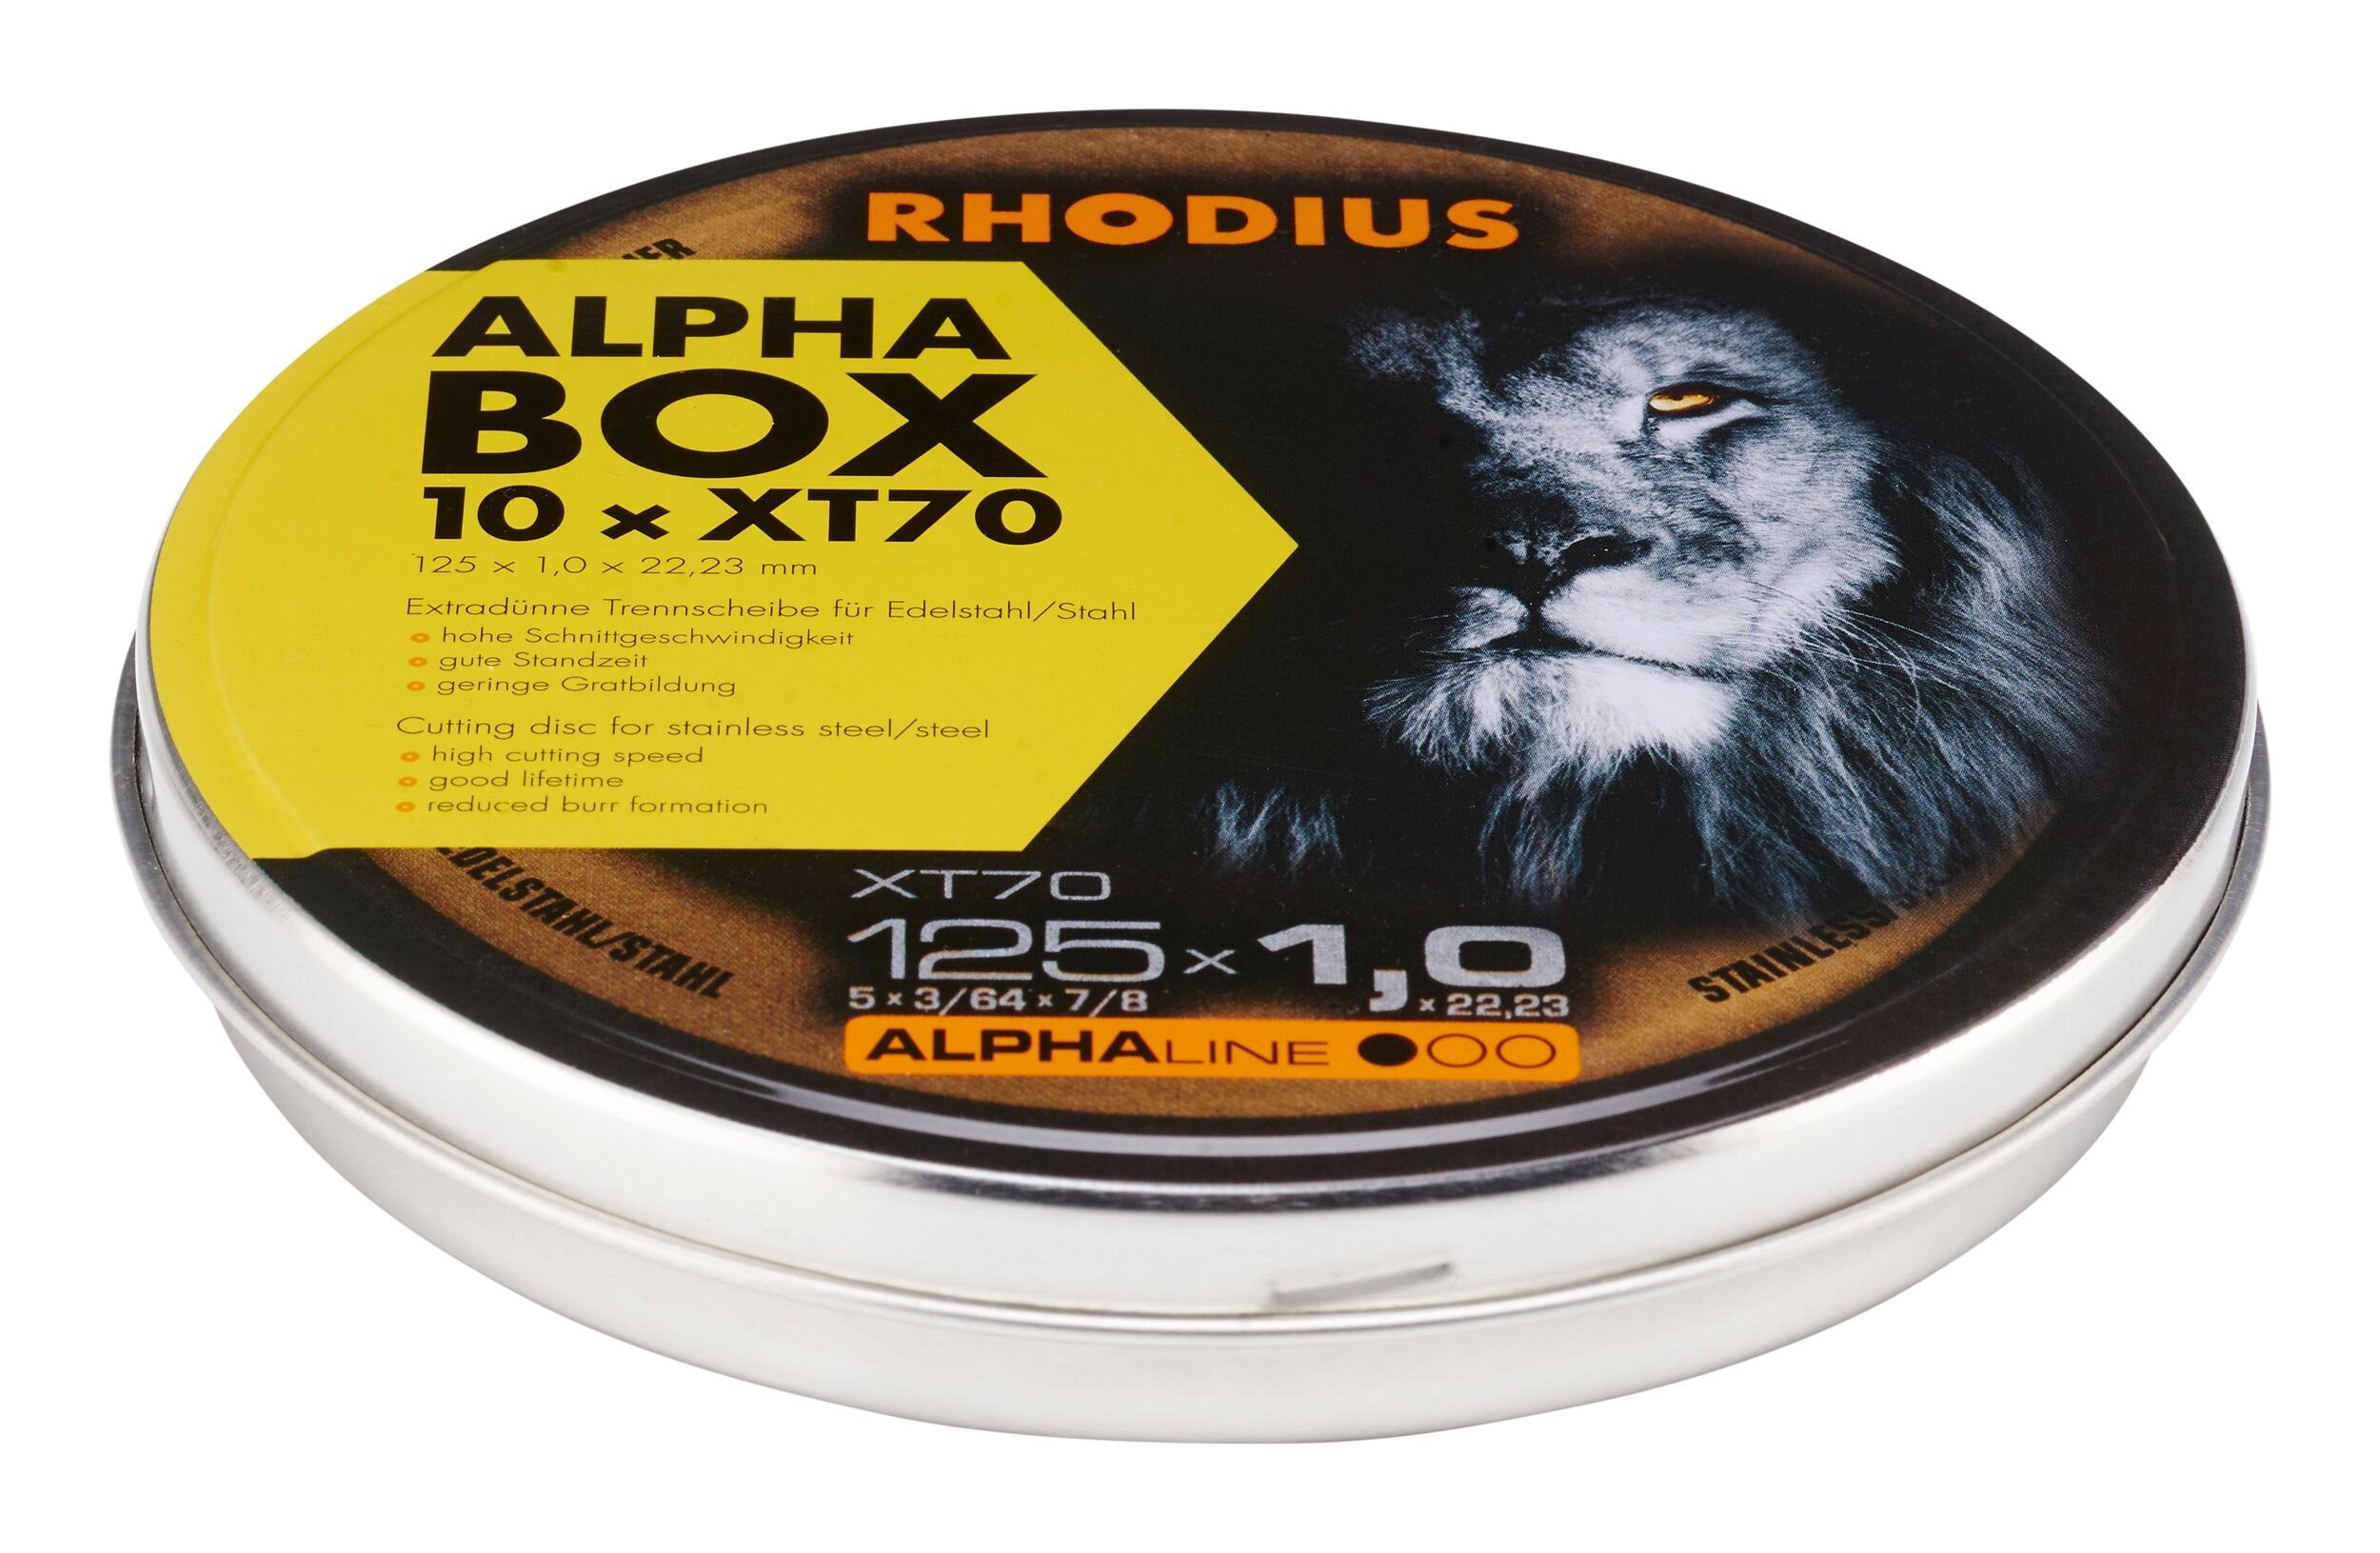 Rhodius Trennscheibe ALPHAline XTS, Ø 125 mm, (10 Stück), ALPHAline XT70 BOX Extradünne - 125 x 1 x 22,23 mm - in der Dose